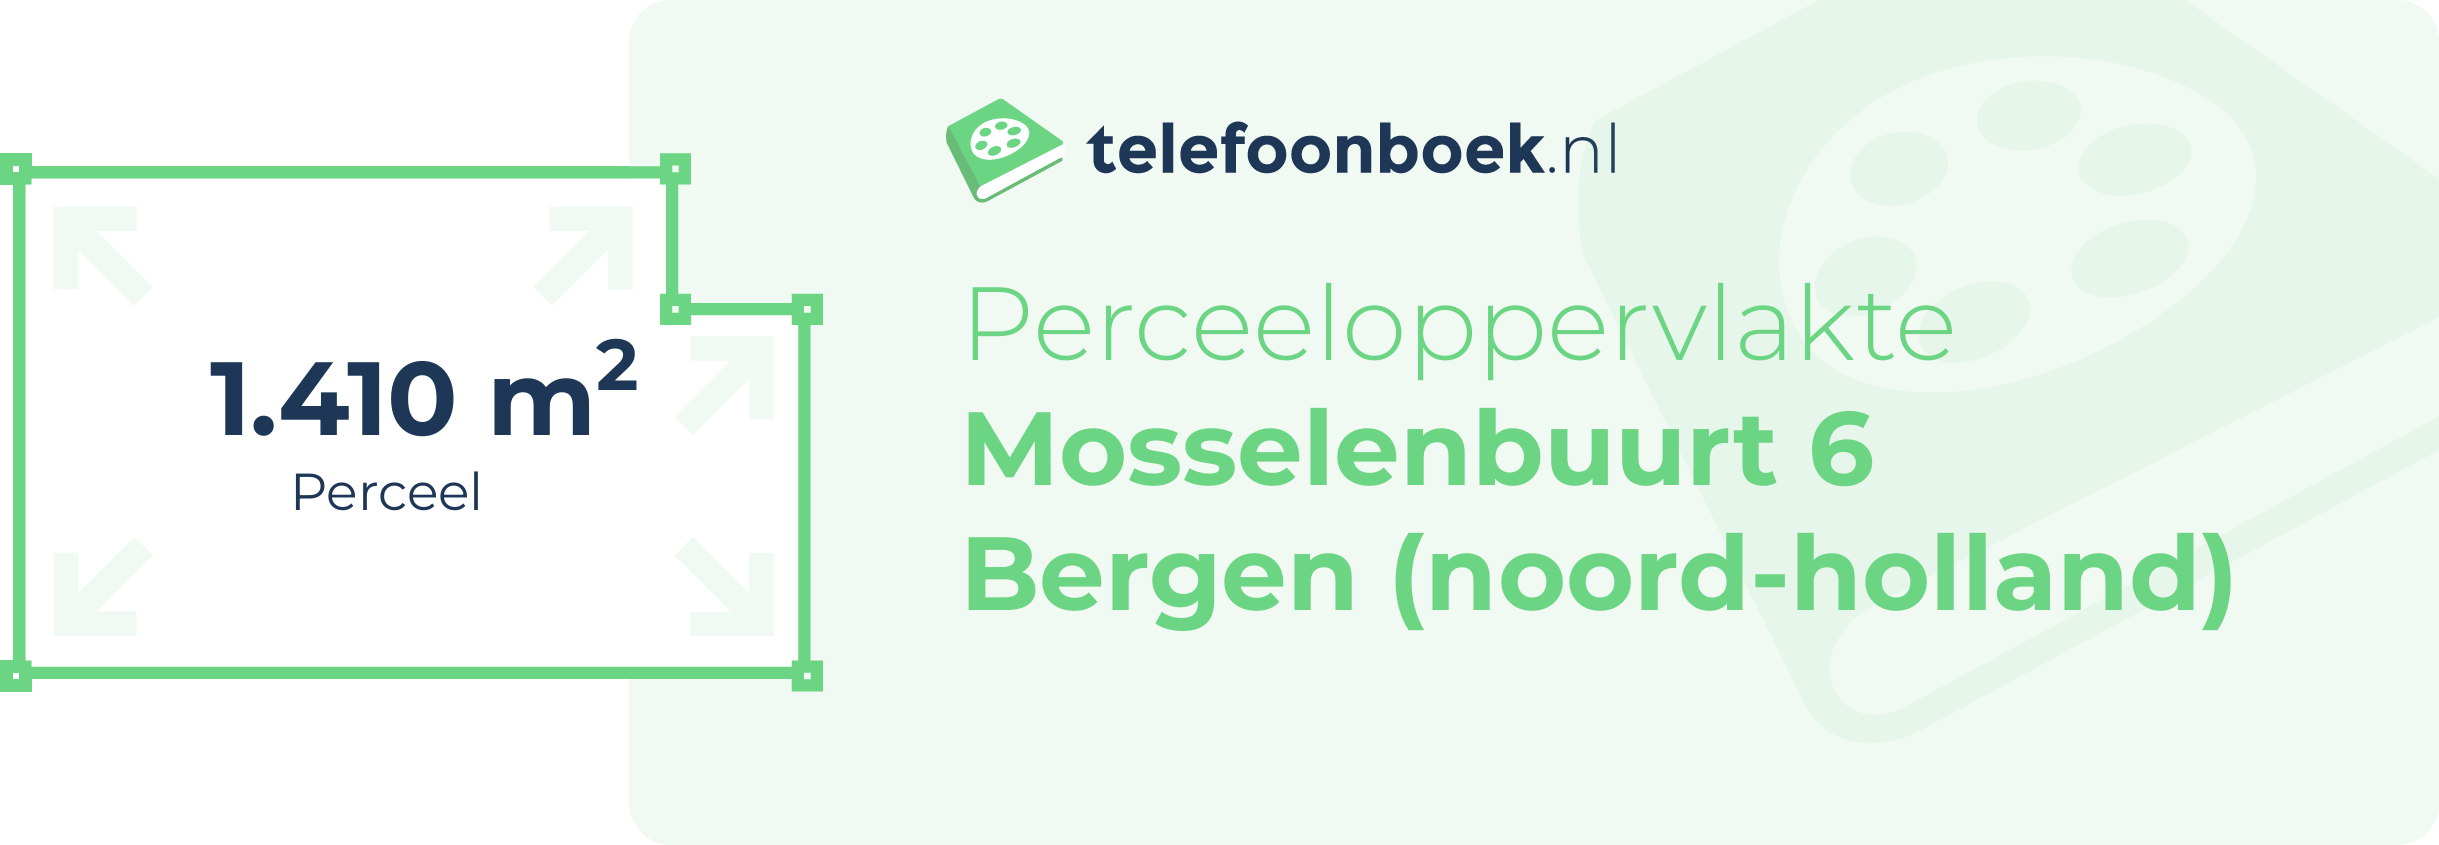 Perceeloppervlakte Mosselenbuurt 6 Bergen (Noord-Holland)